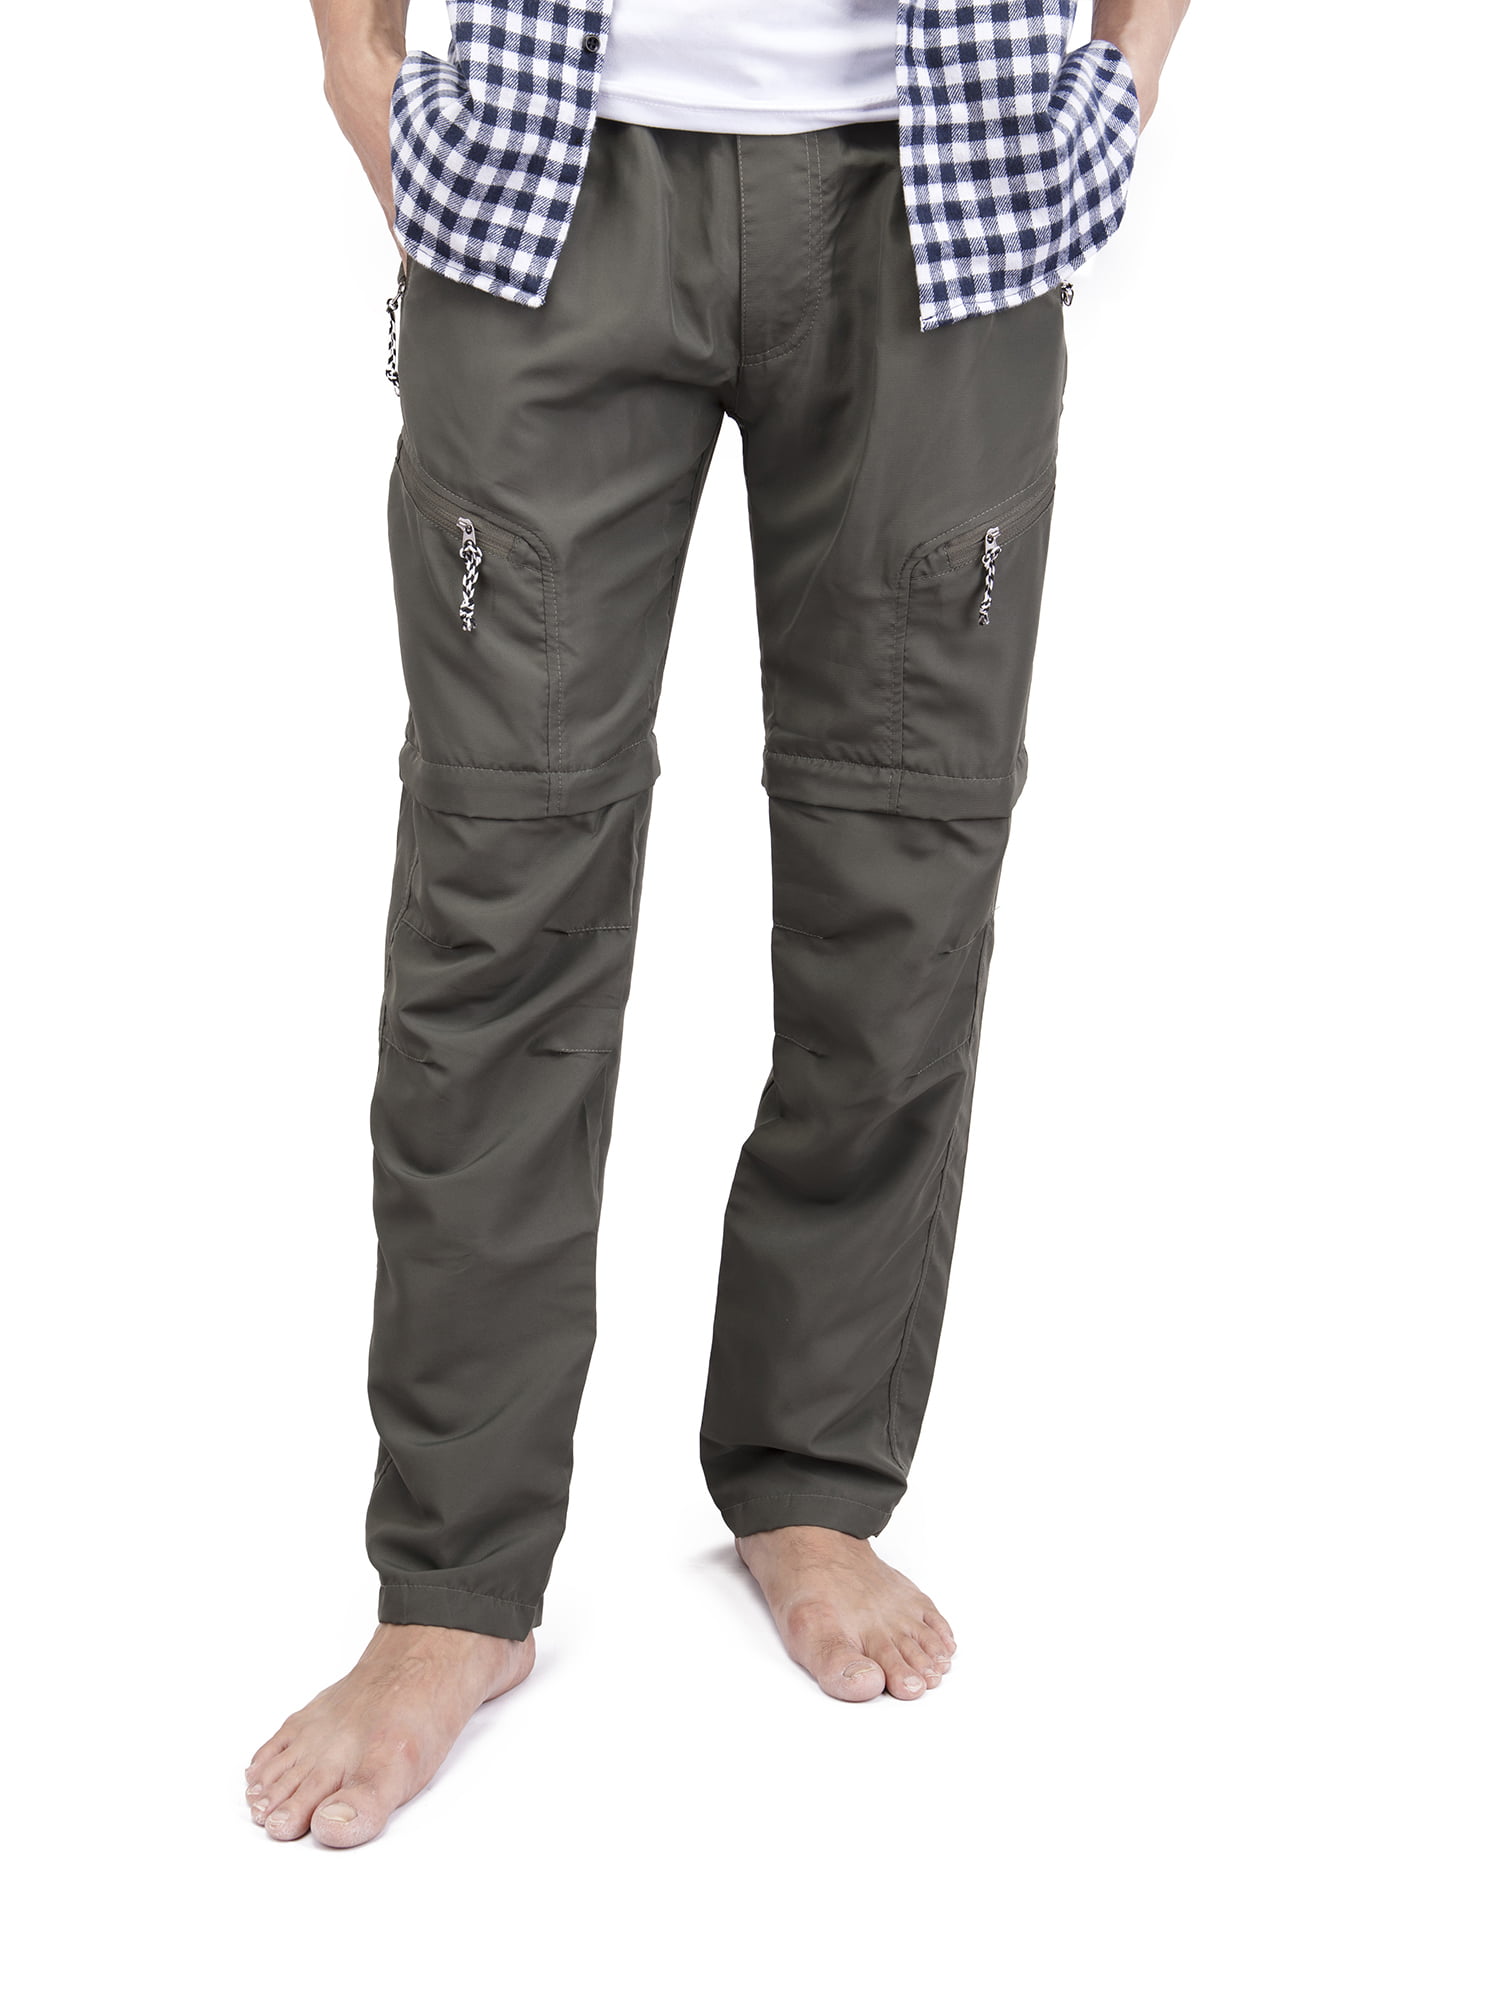 nylon pants for hiking